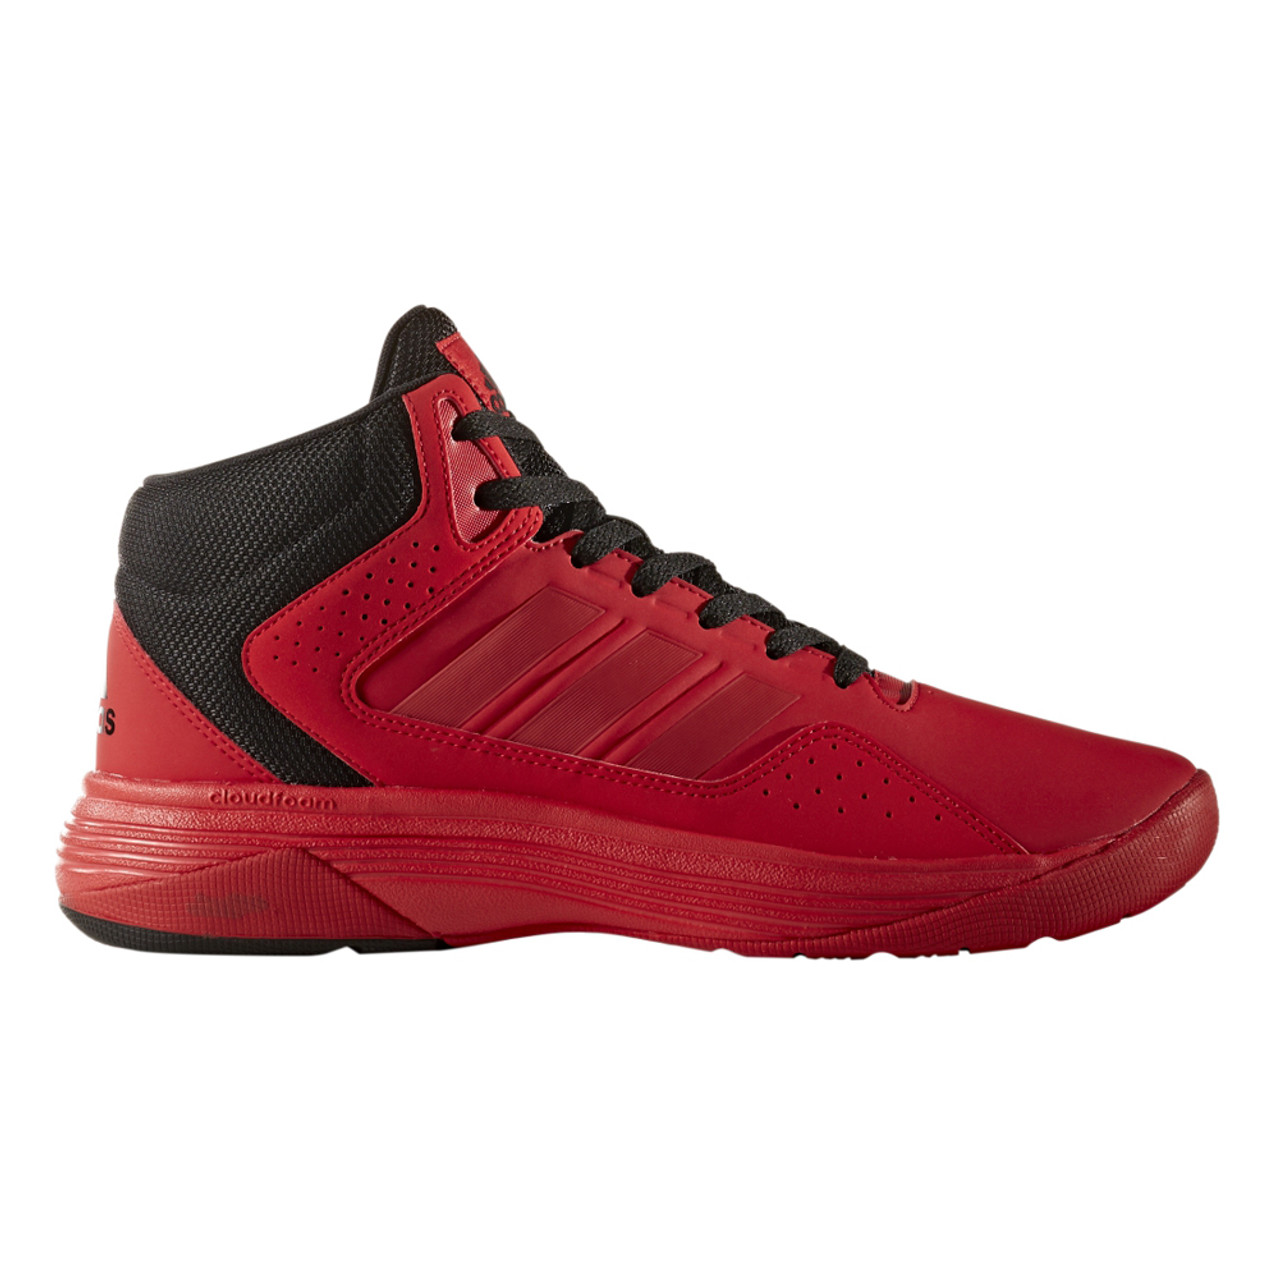 Men's Cloudfoam Ilation Mid Basketball Shoe - Red Discount Adidas Men's Athletic Shoes & More - Shoolu.com Shoolu.com